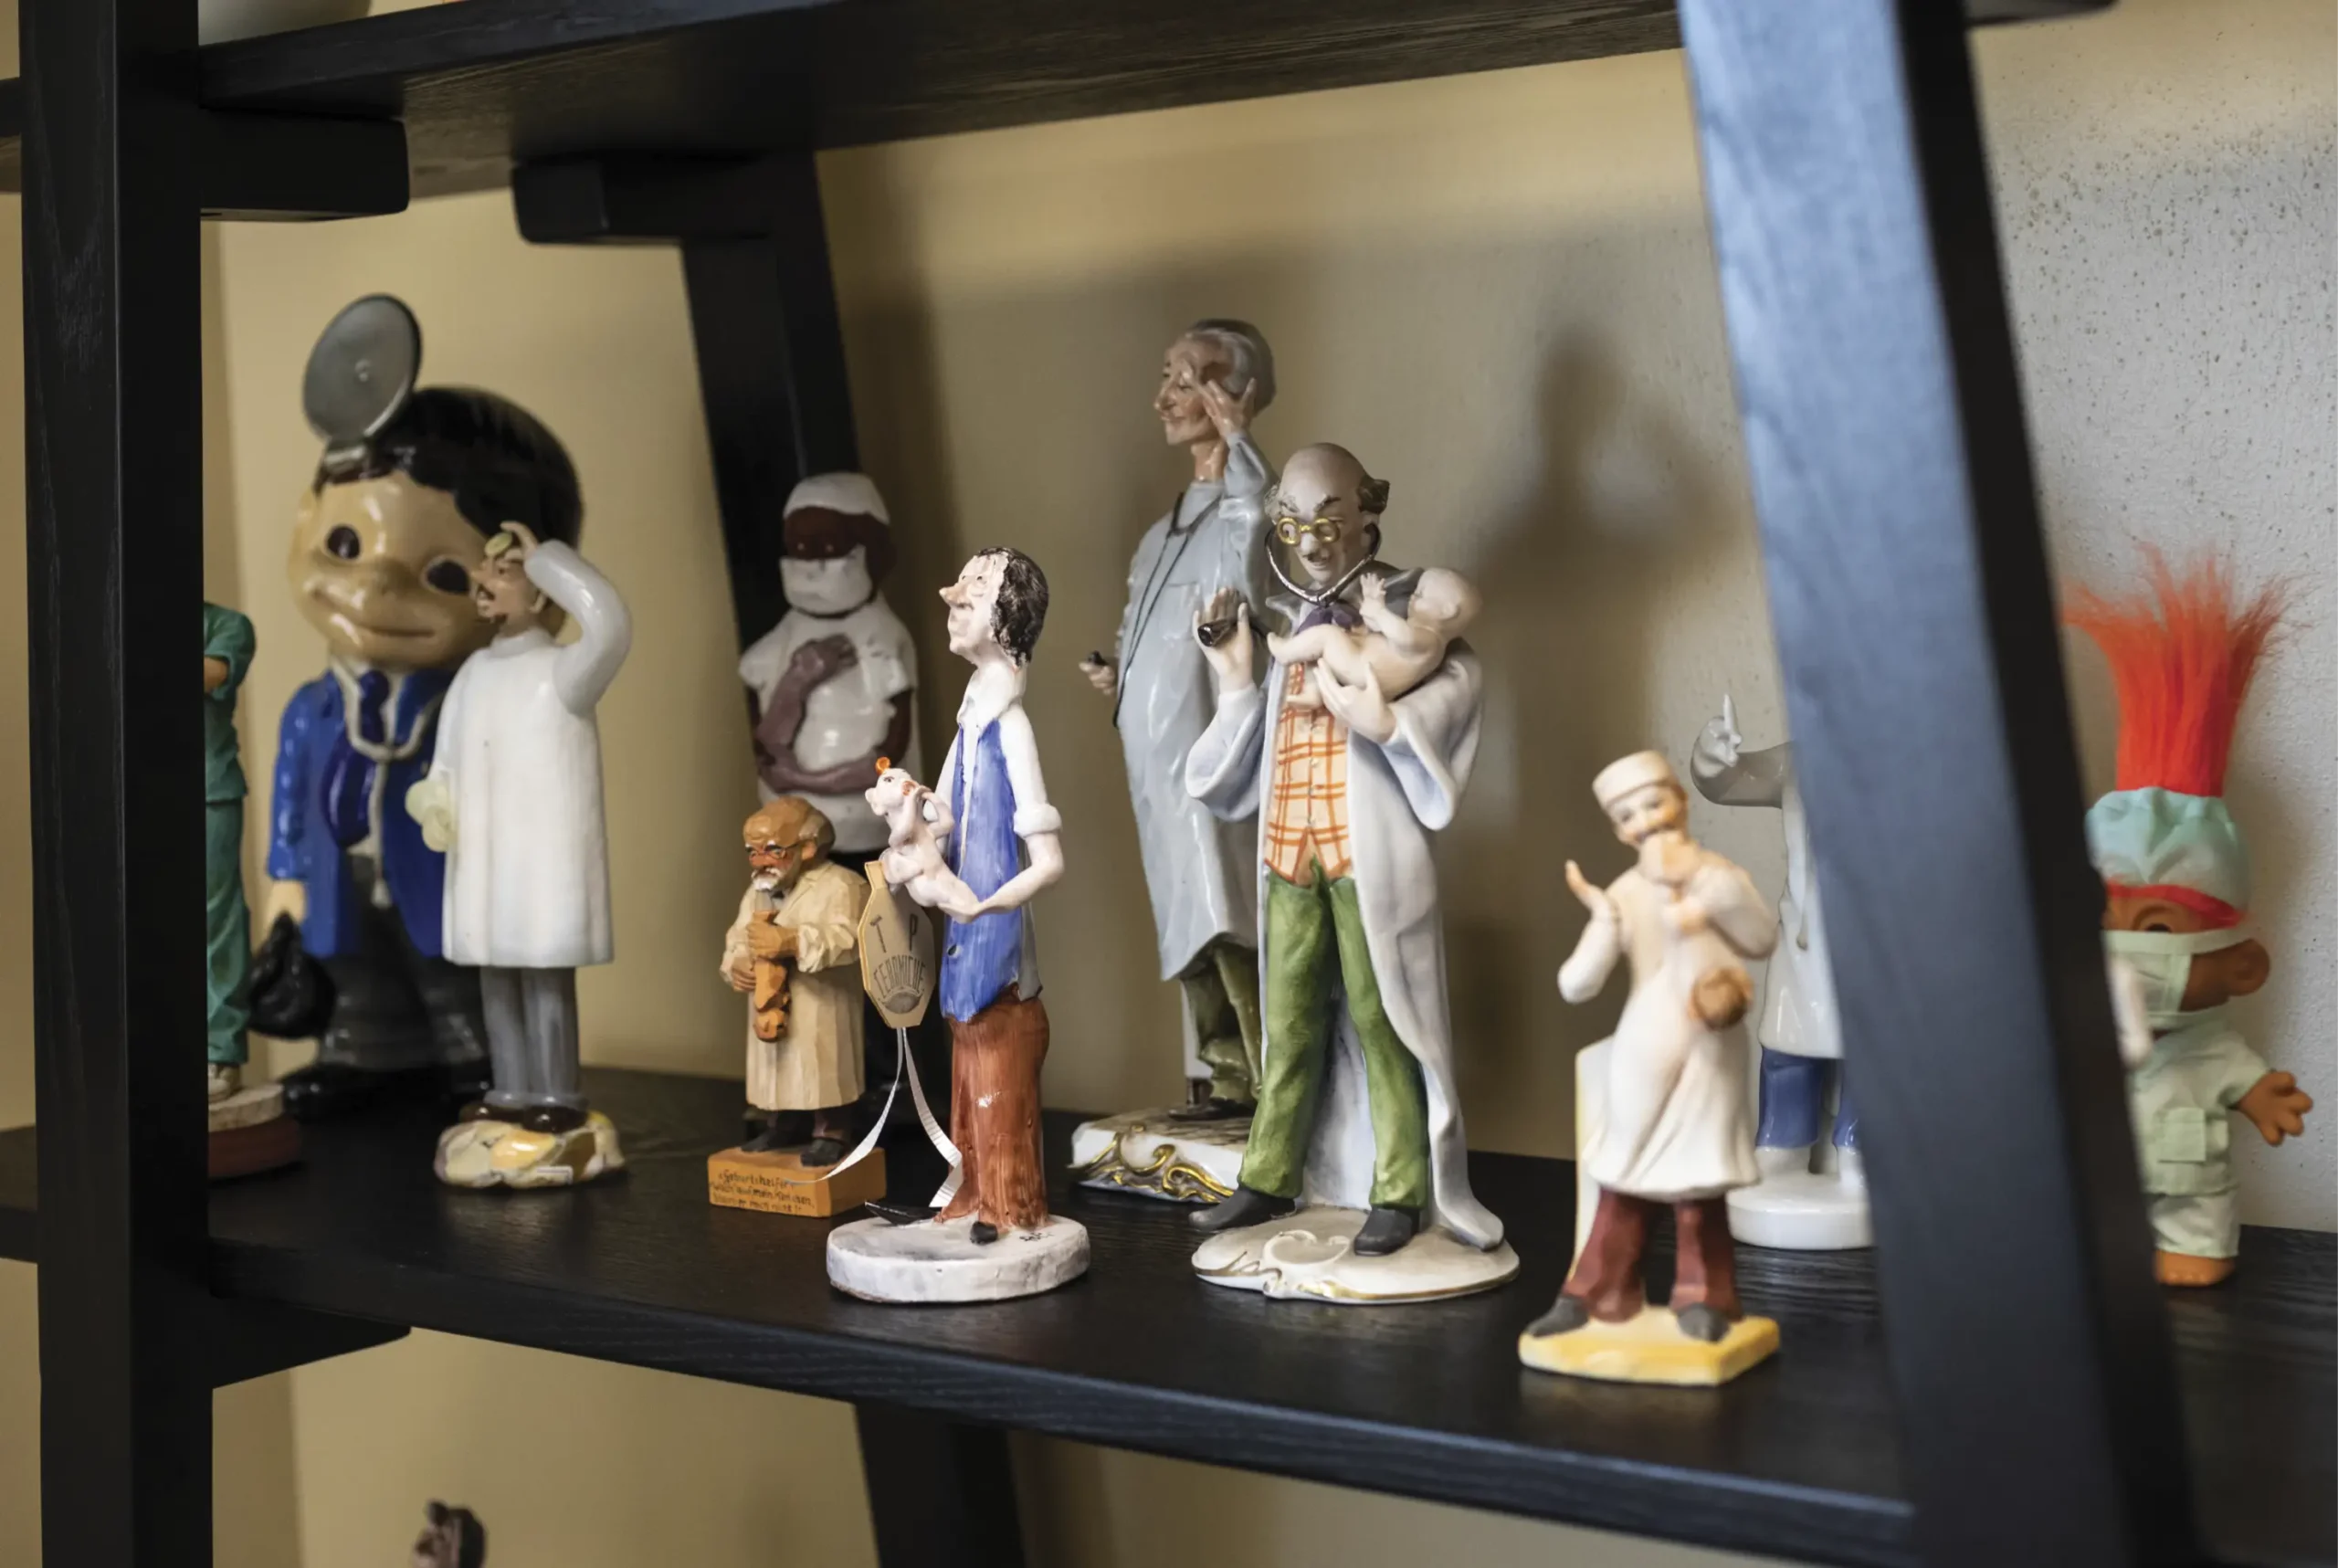 Group of assorted figurines on shelf